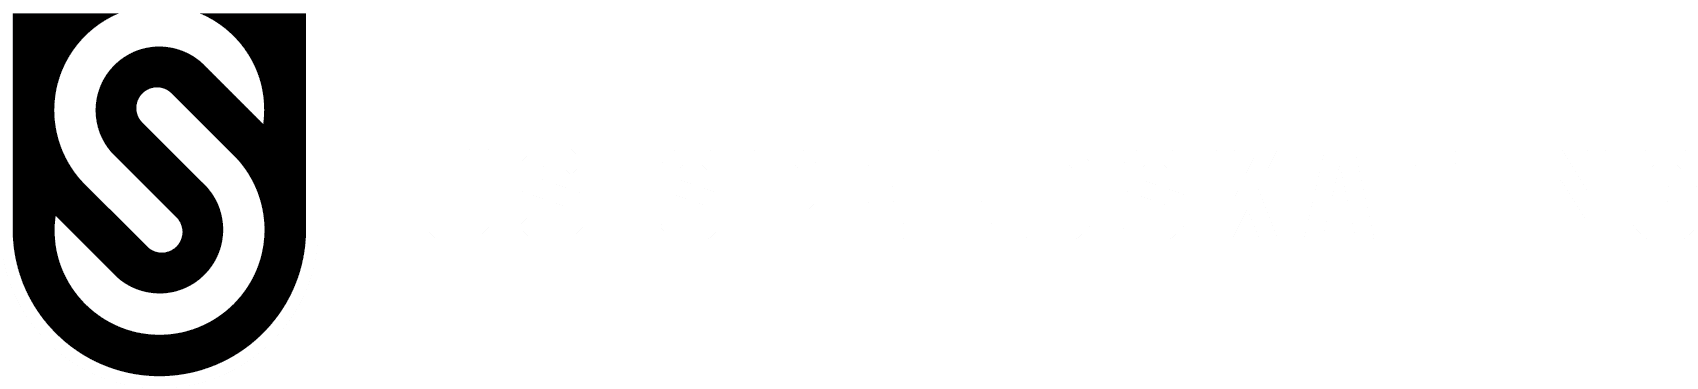 US Speedskating logo